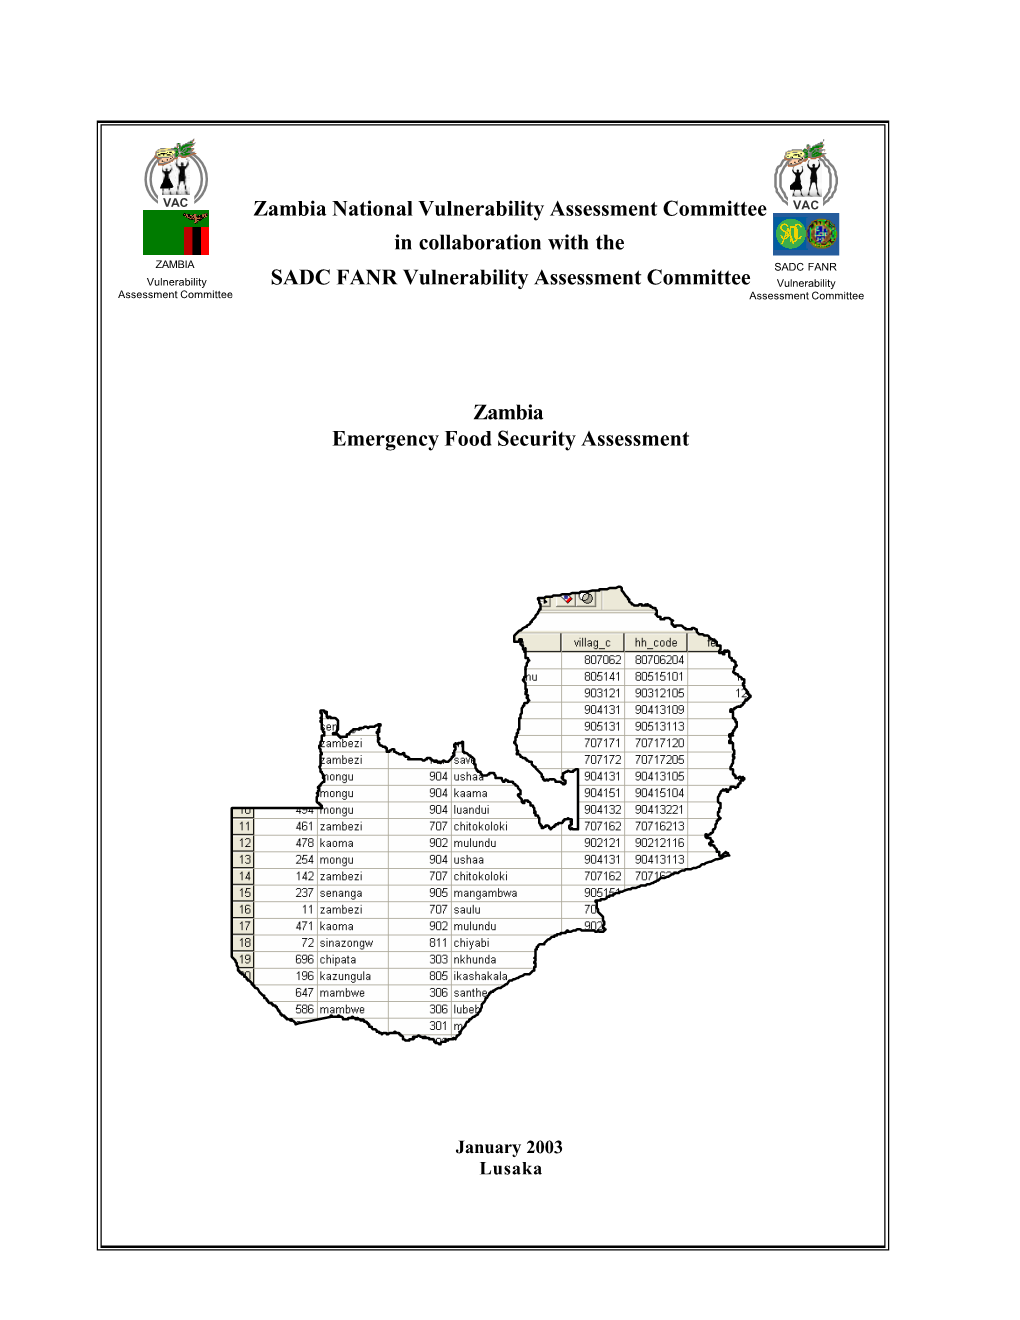 Zambia National Vulnerability Assessment Committee VAC